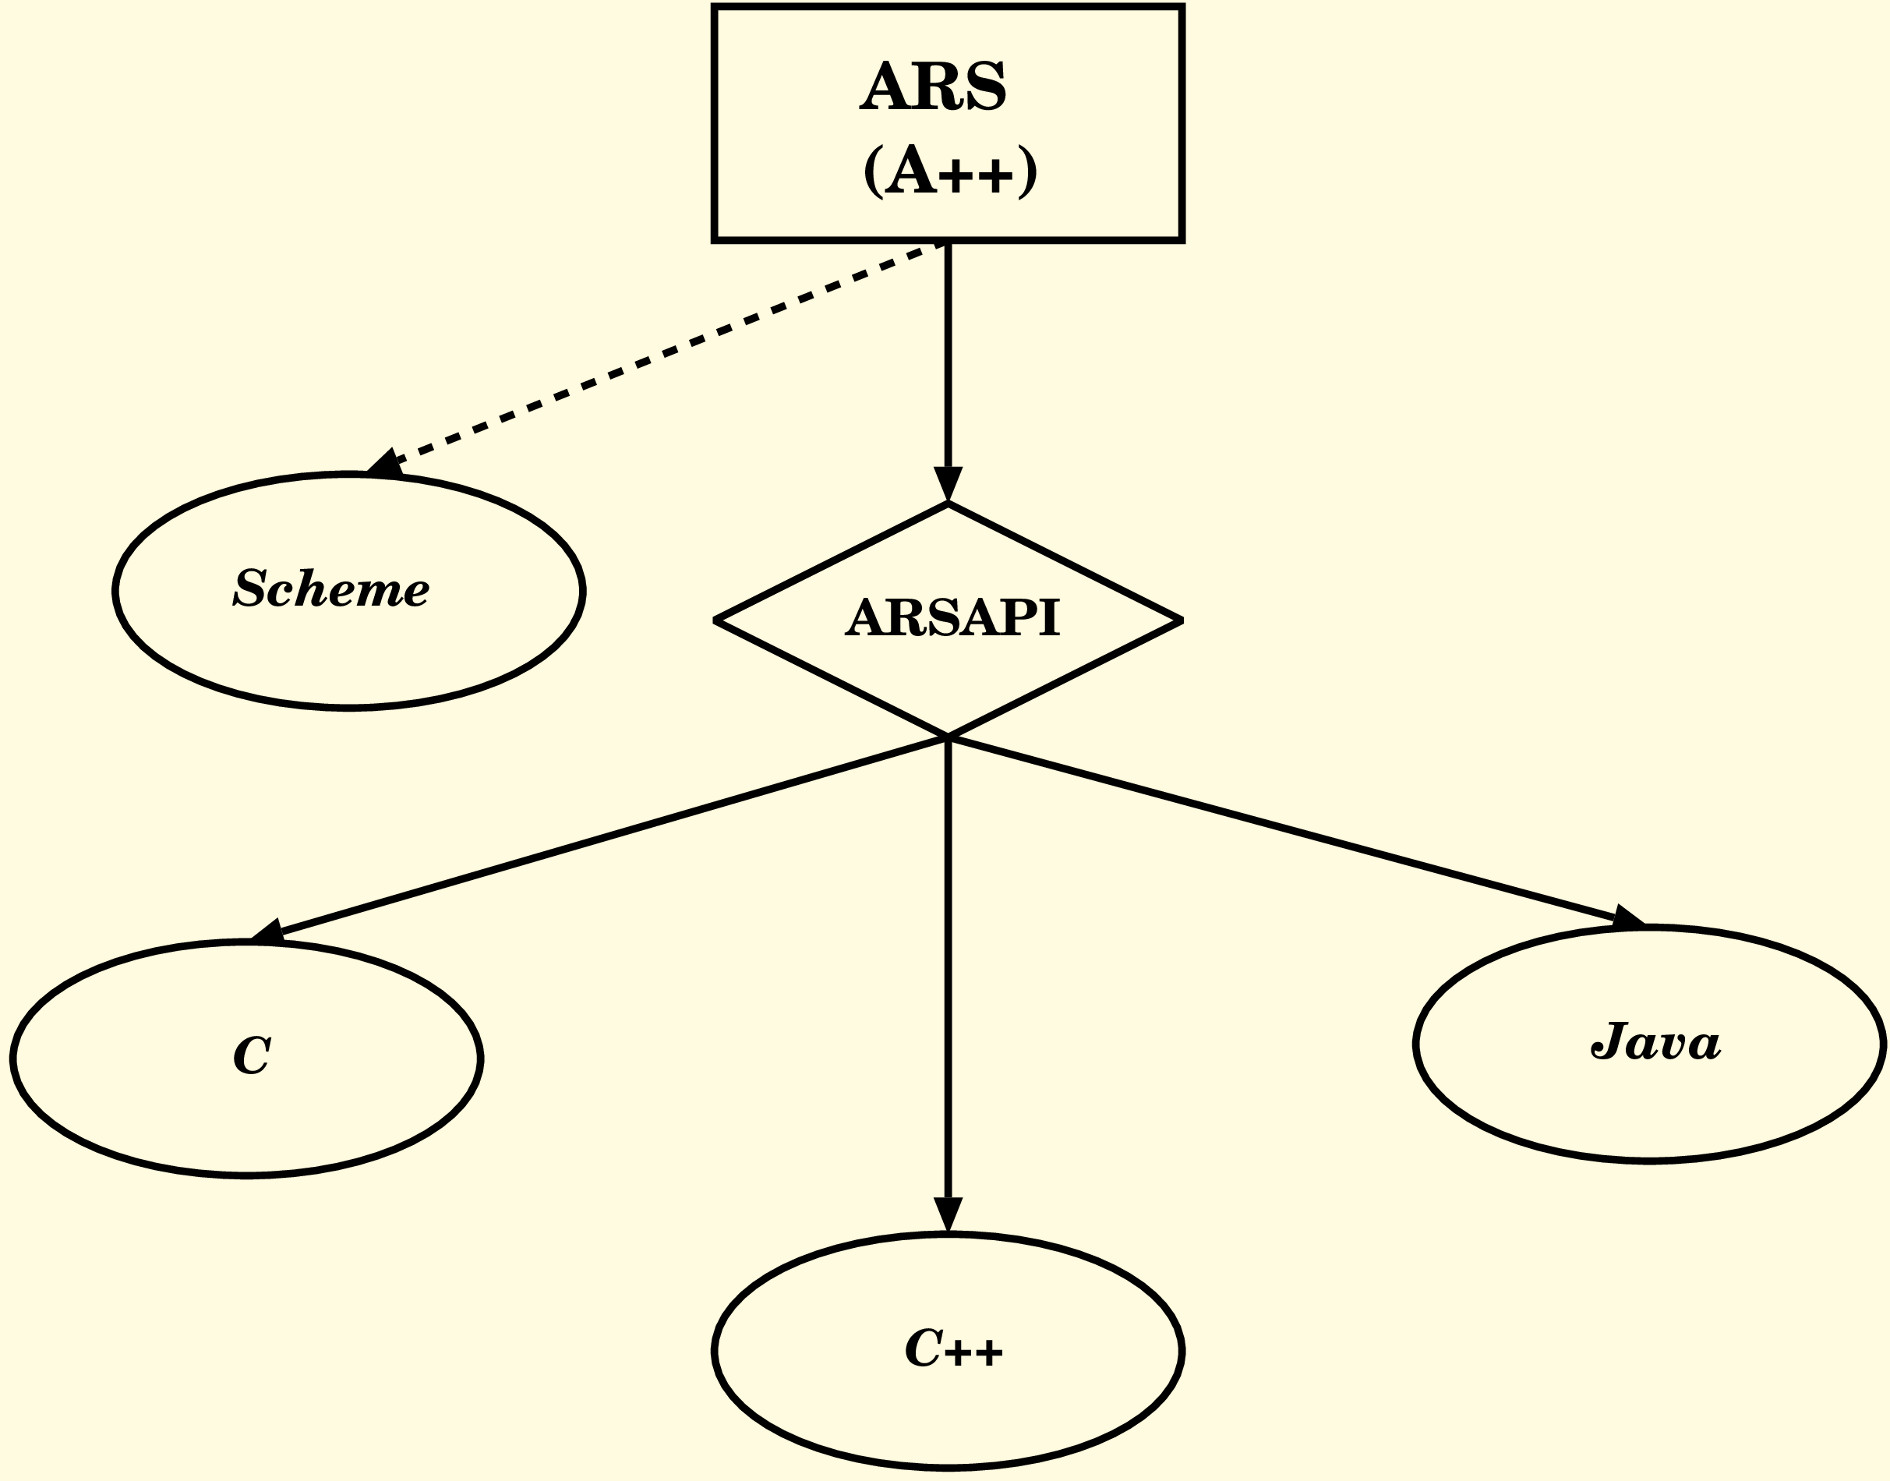 ARSAPI, clam, lambda abstractions in C